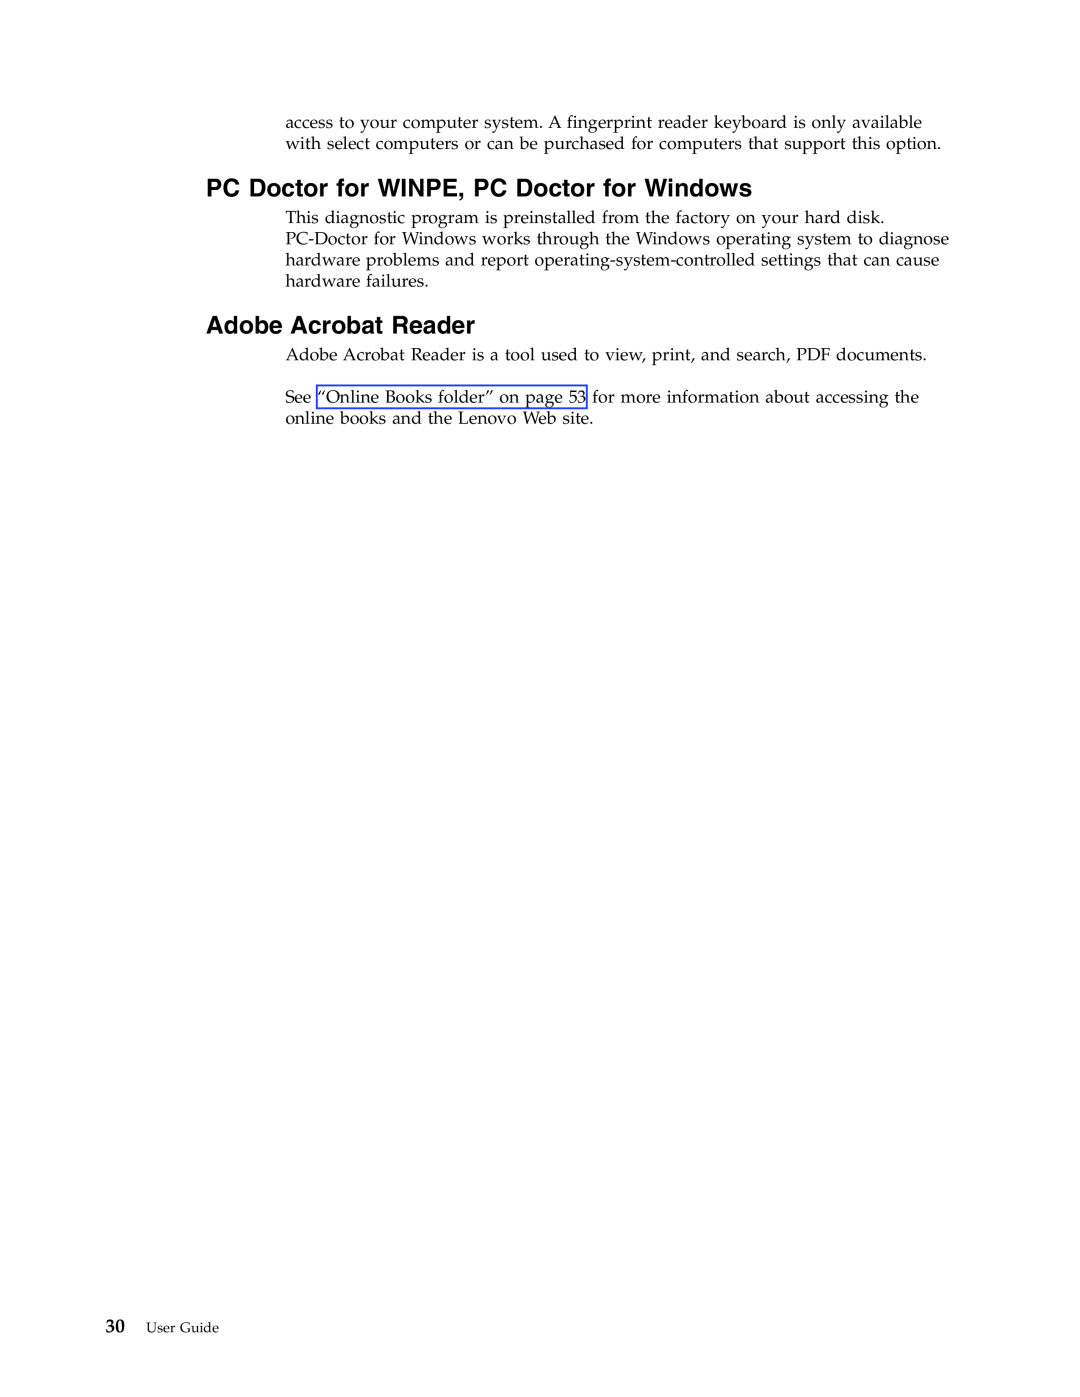 Lenovo 6065, 9172, 9181, 9162, 9182, 9196, 9163 PC Doctor for WINPE, PC Doctor for Windows, Adobe Acrobat Reader, 30User Guide 